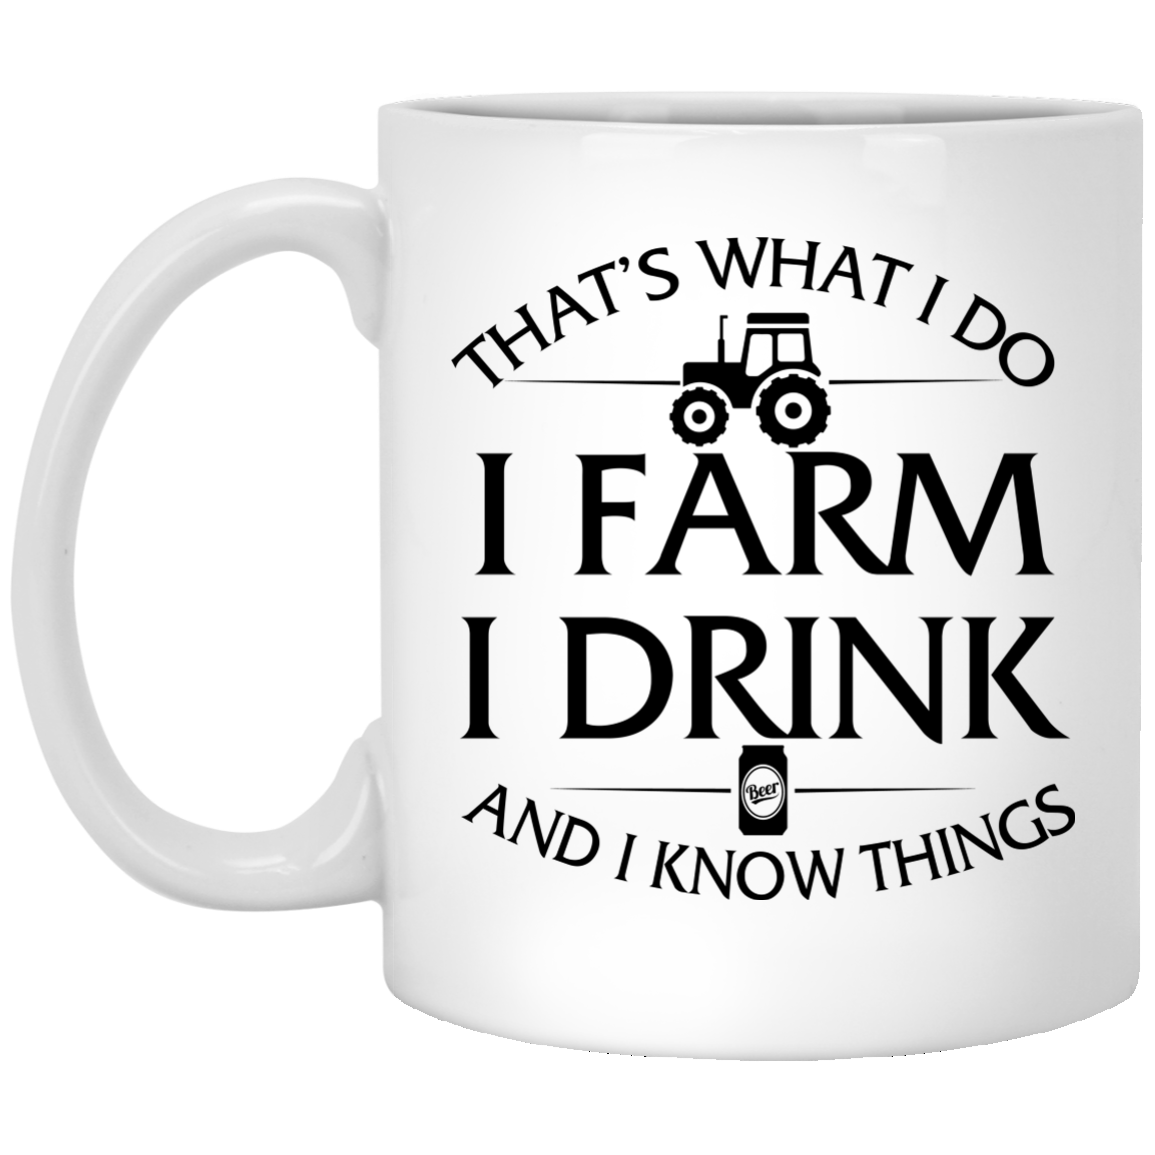 Farmer mug: I Farm I Drink and I Know things